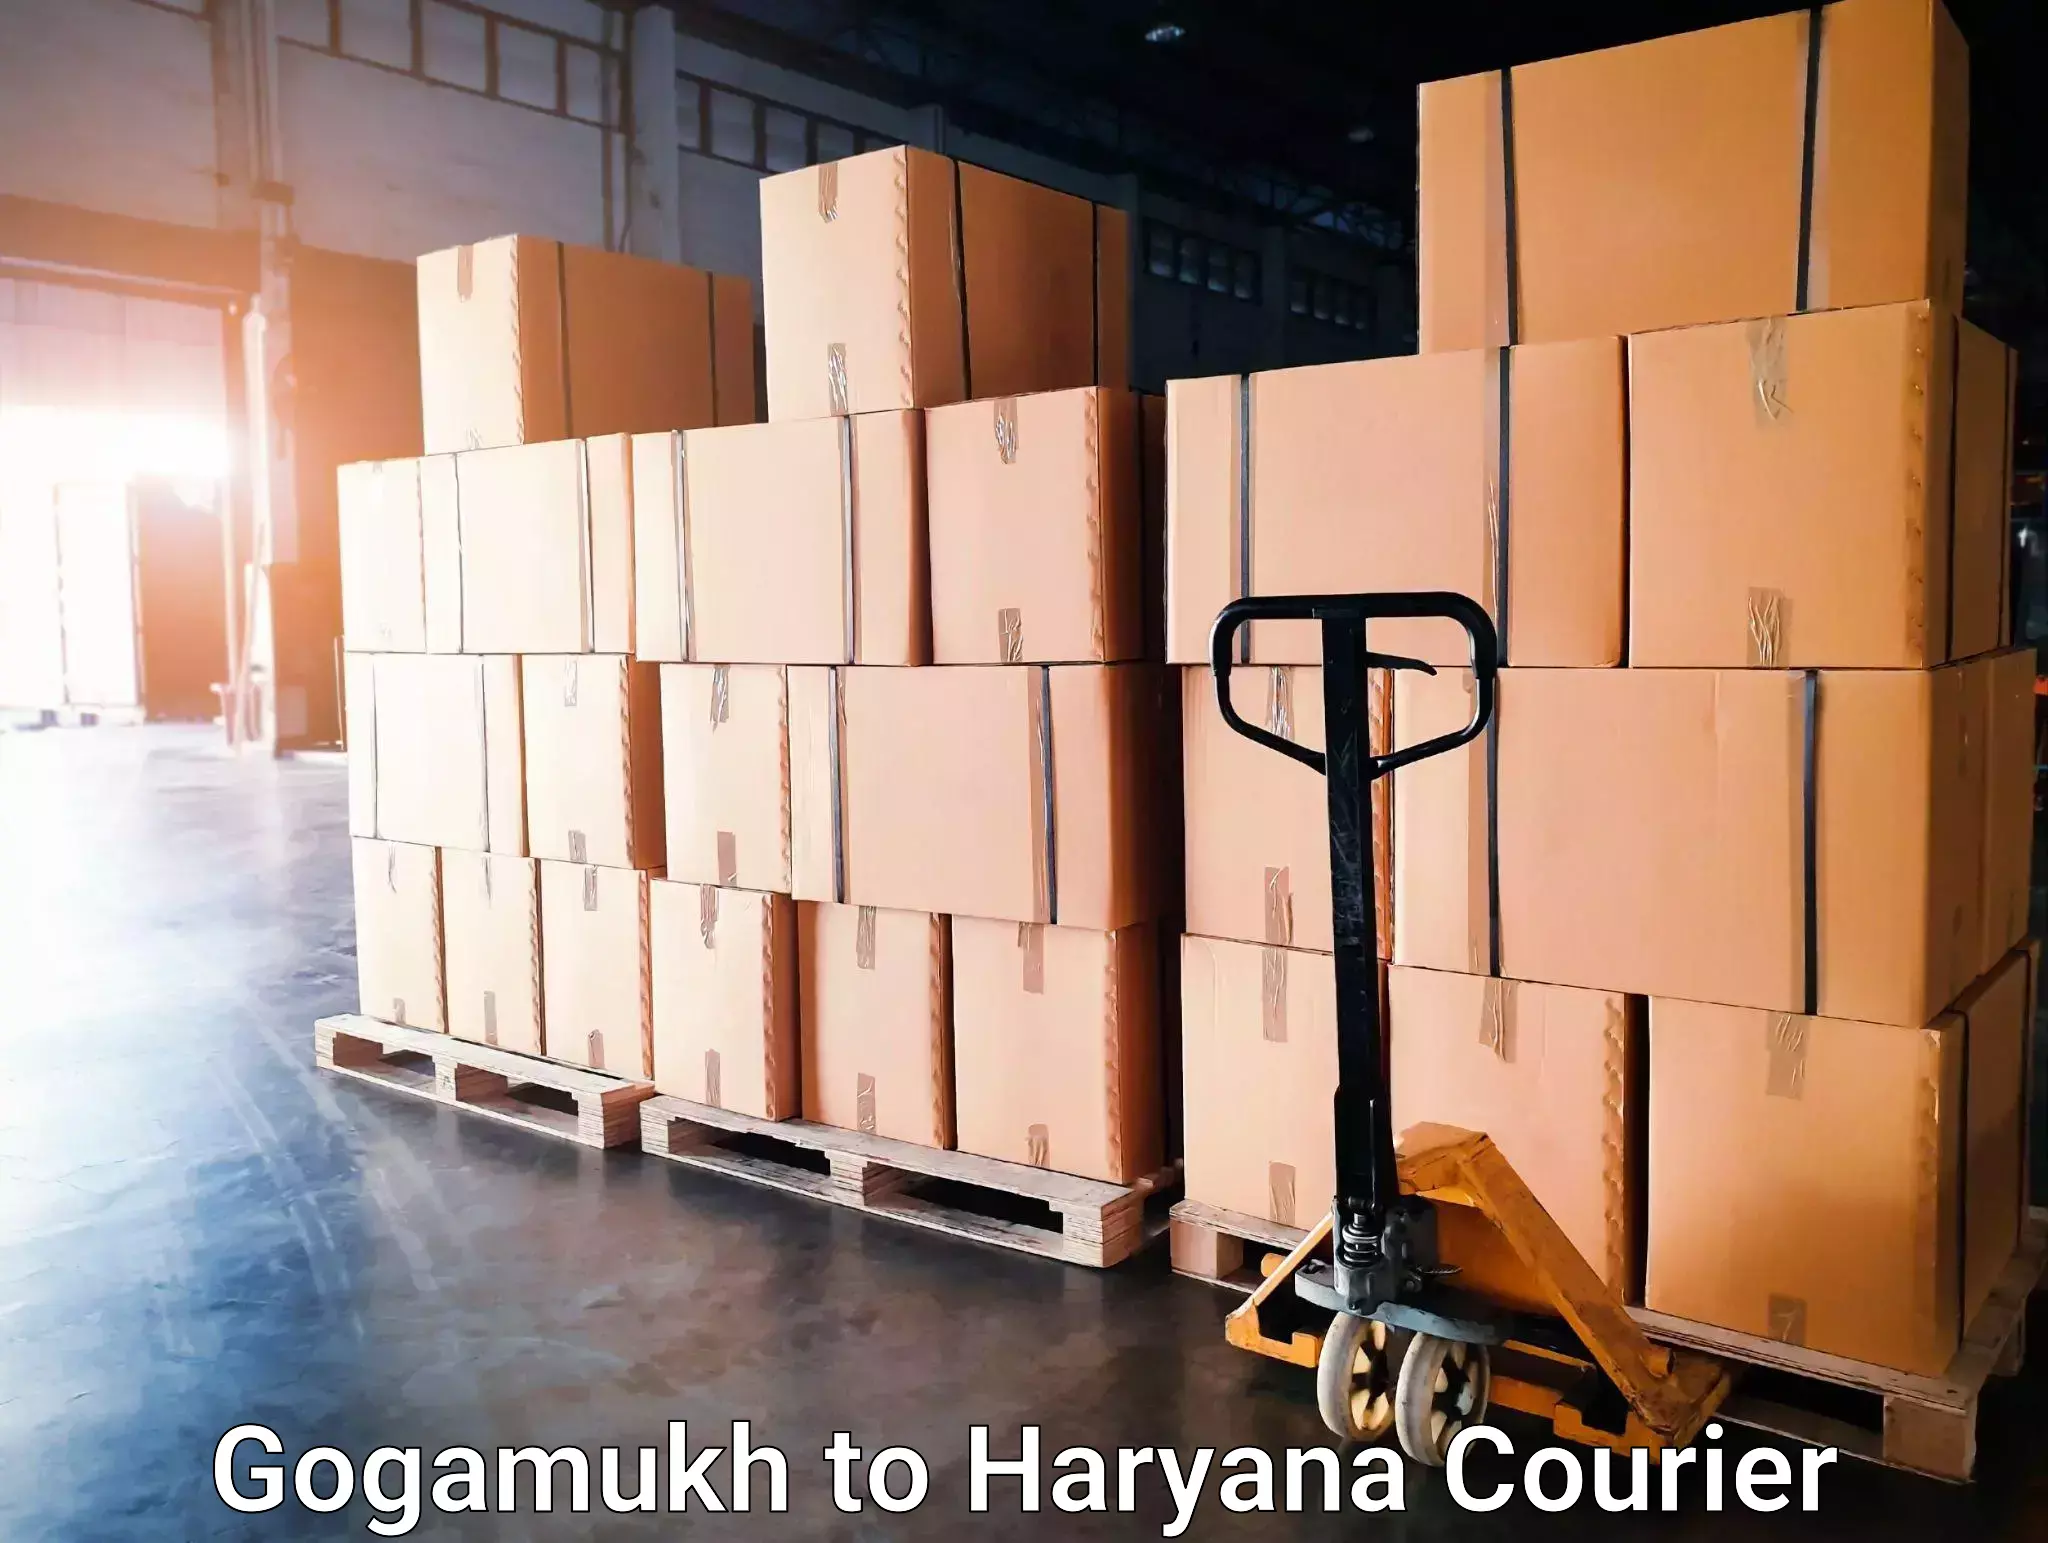 Courier service comparison Gogamukh to NCR Haryana